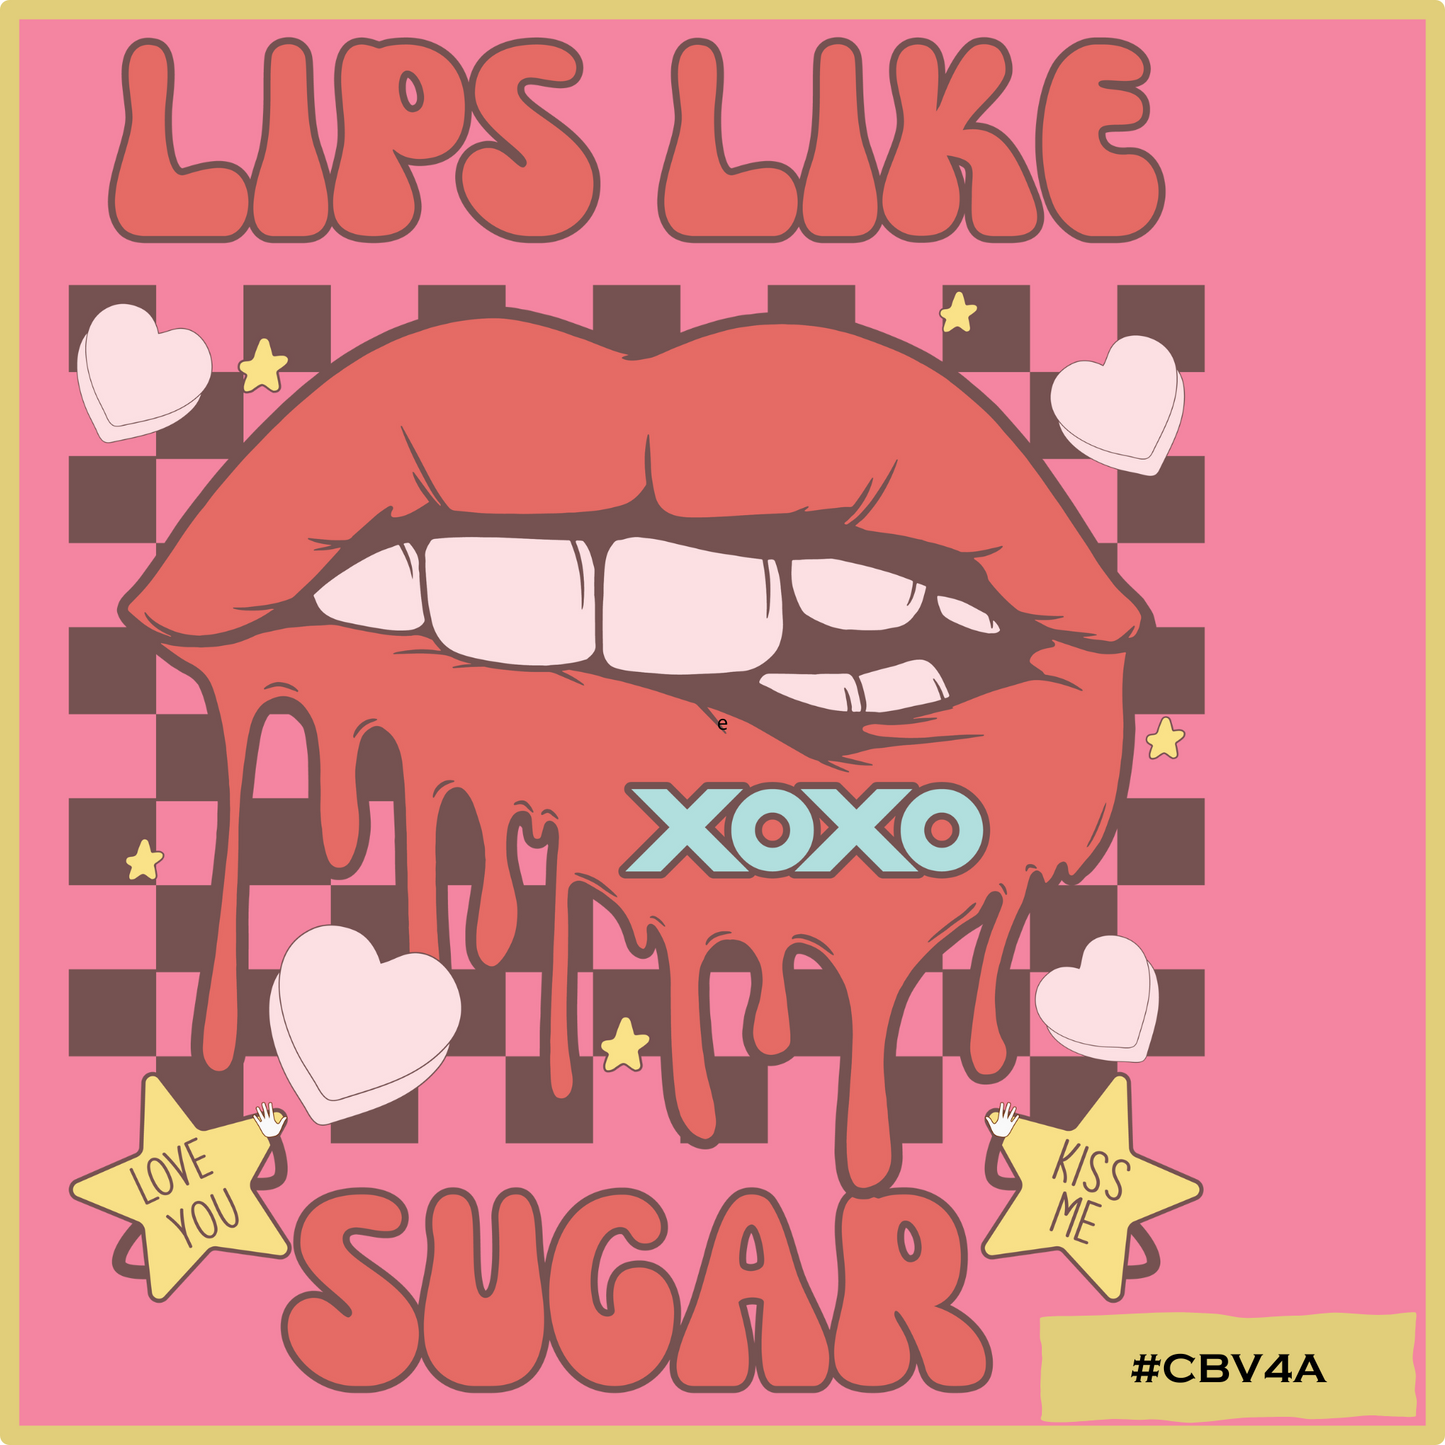 Lips Like Sugar